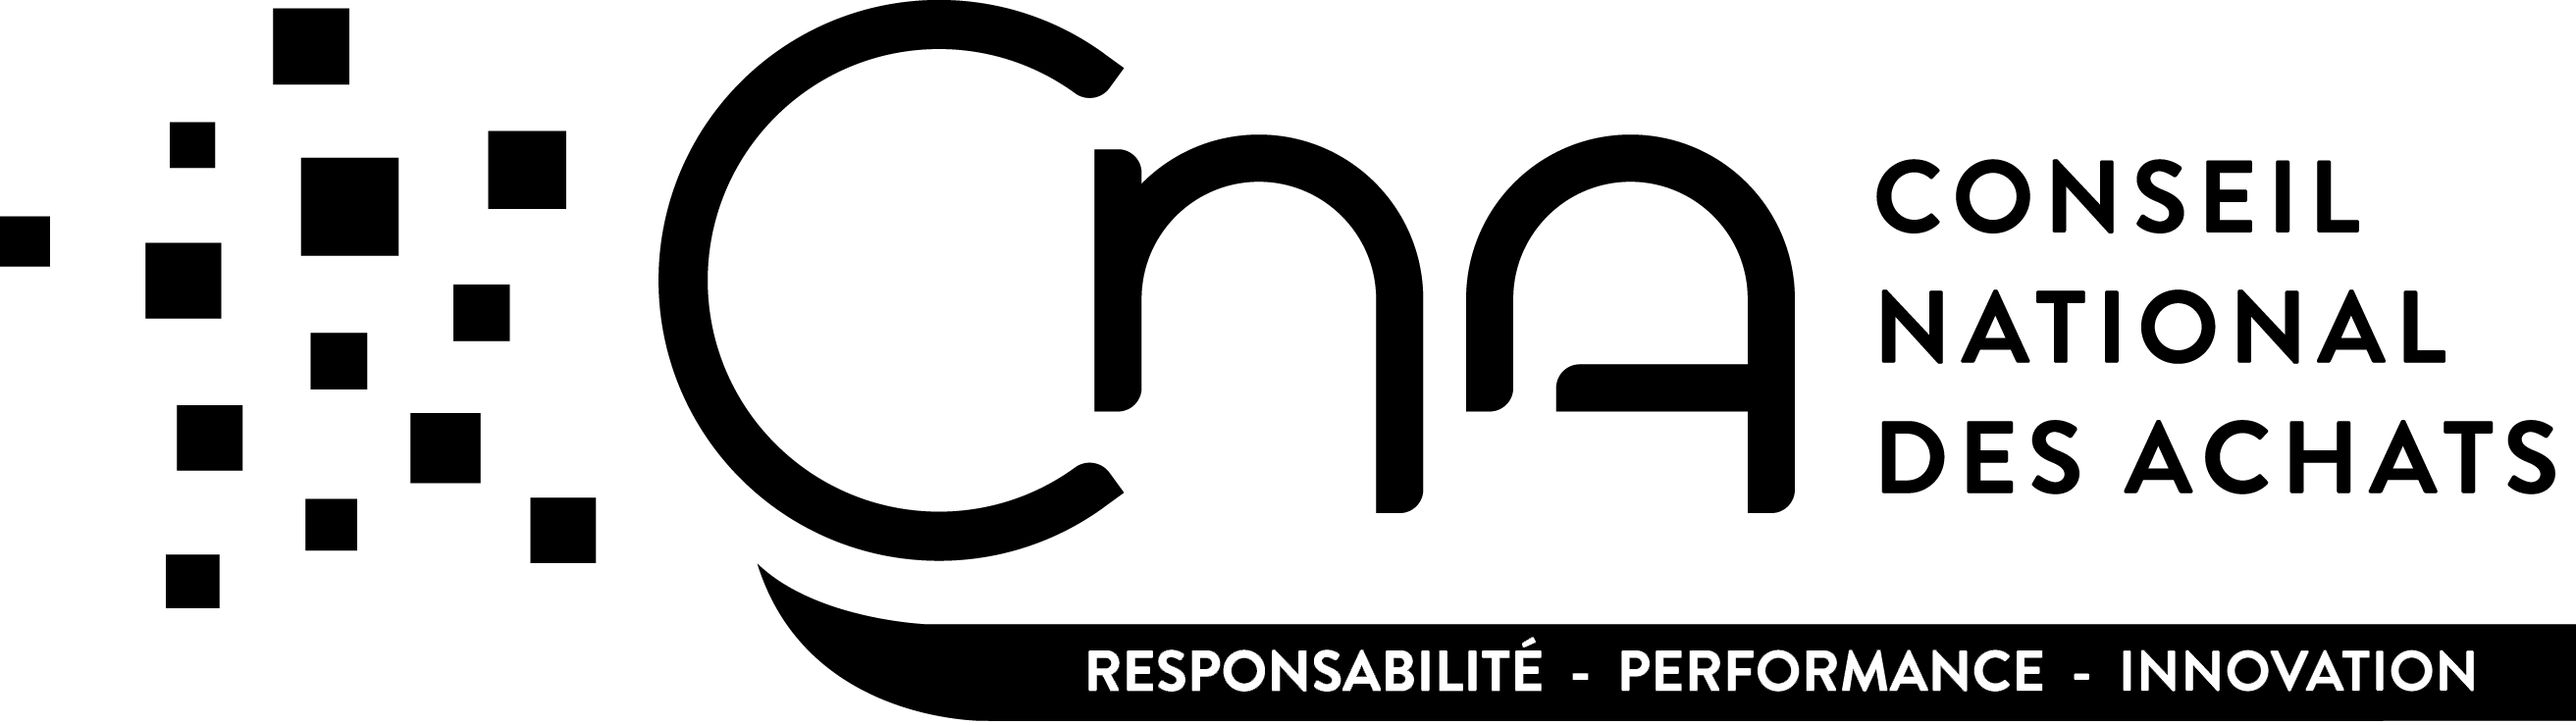 Cna Logo Monochrome Blanc